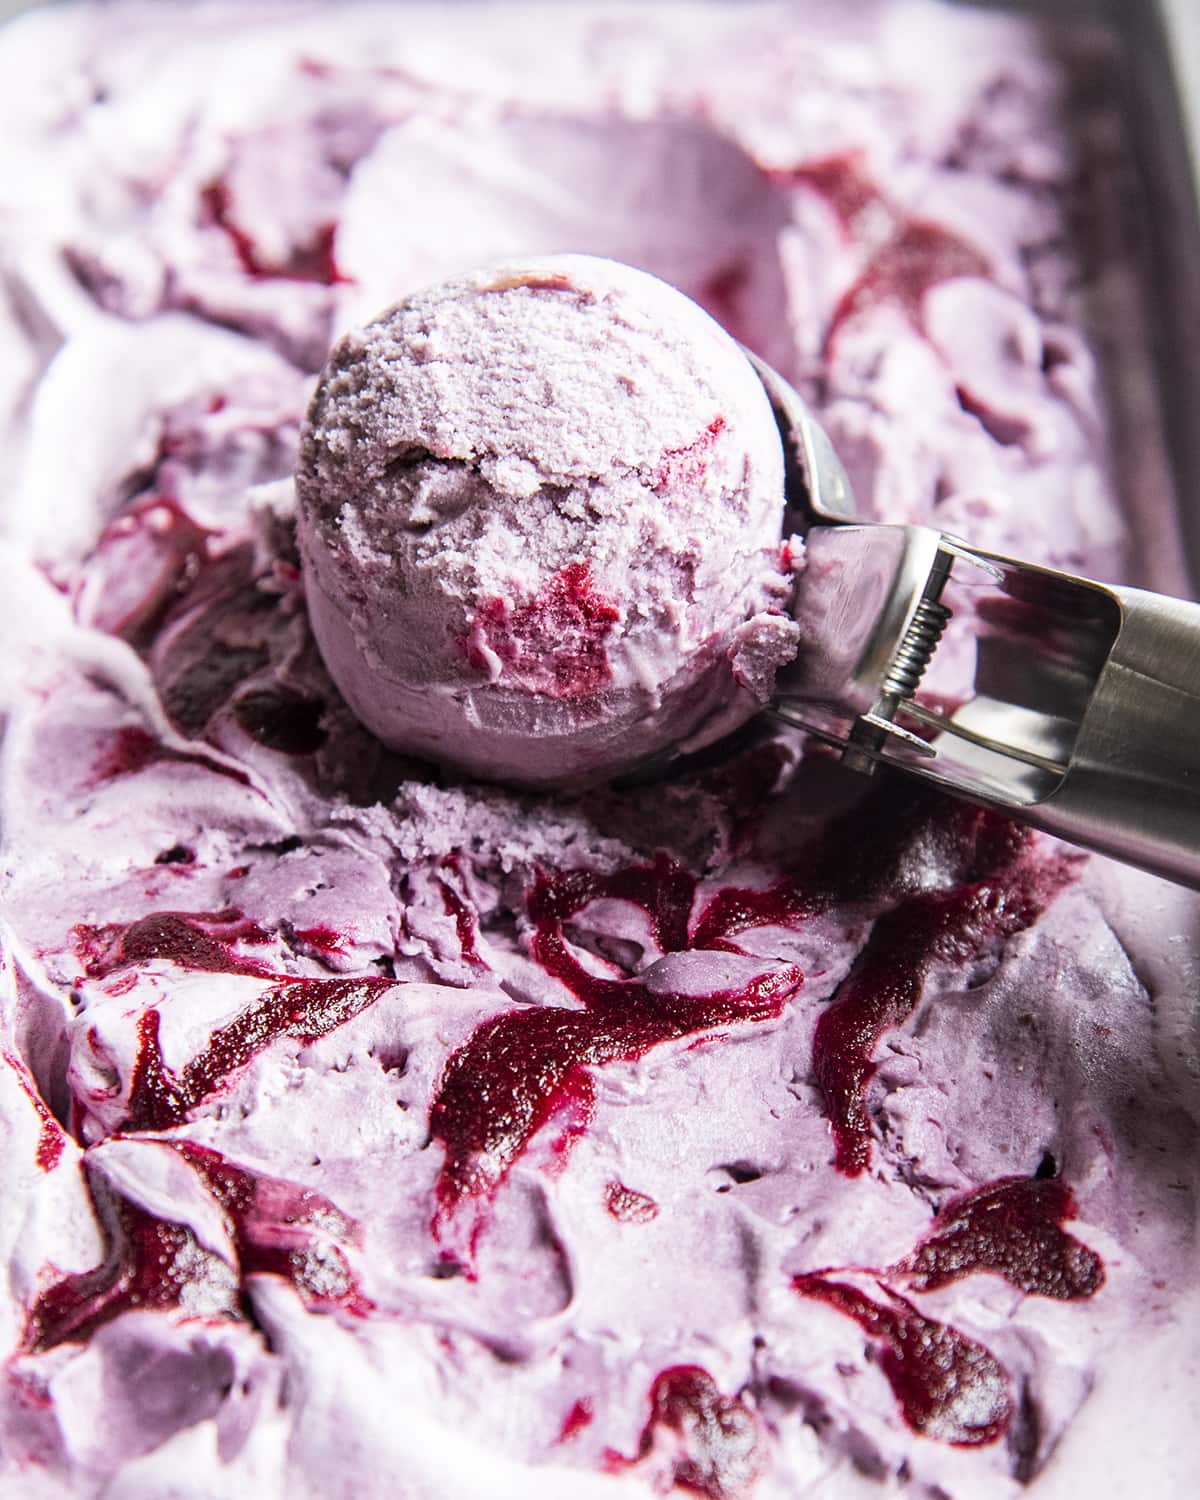 A close up of a scoop of purple blackberry ice cream in an ice cream scooper.